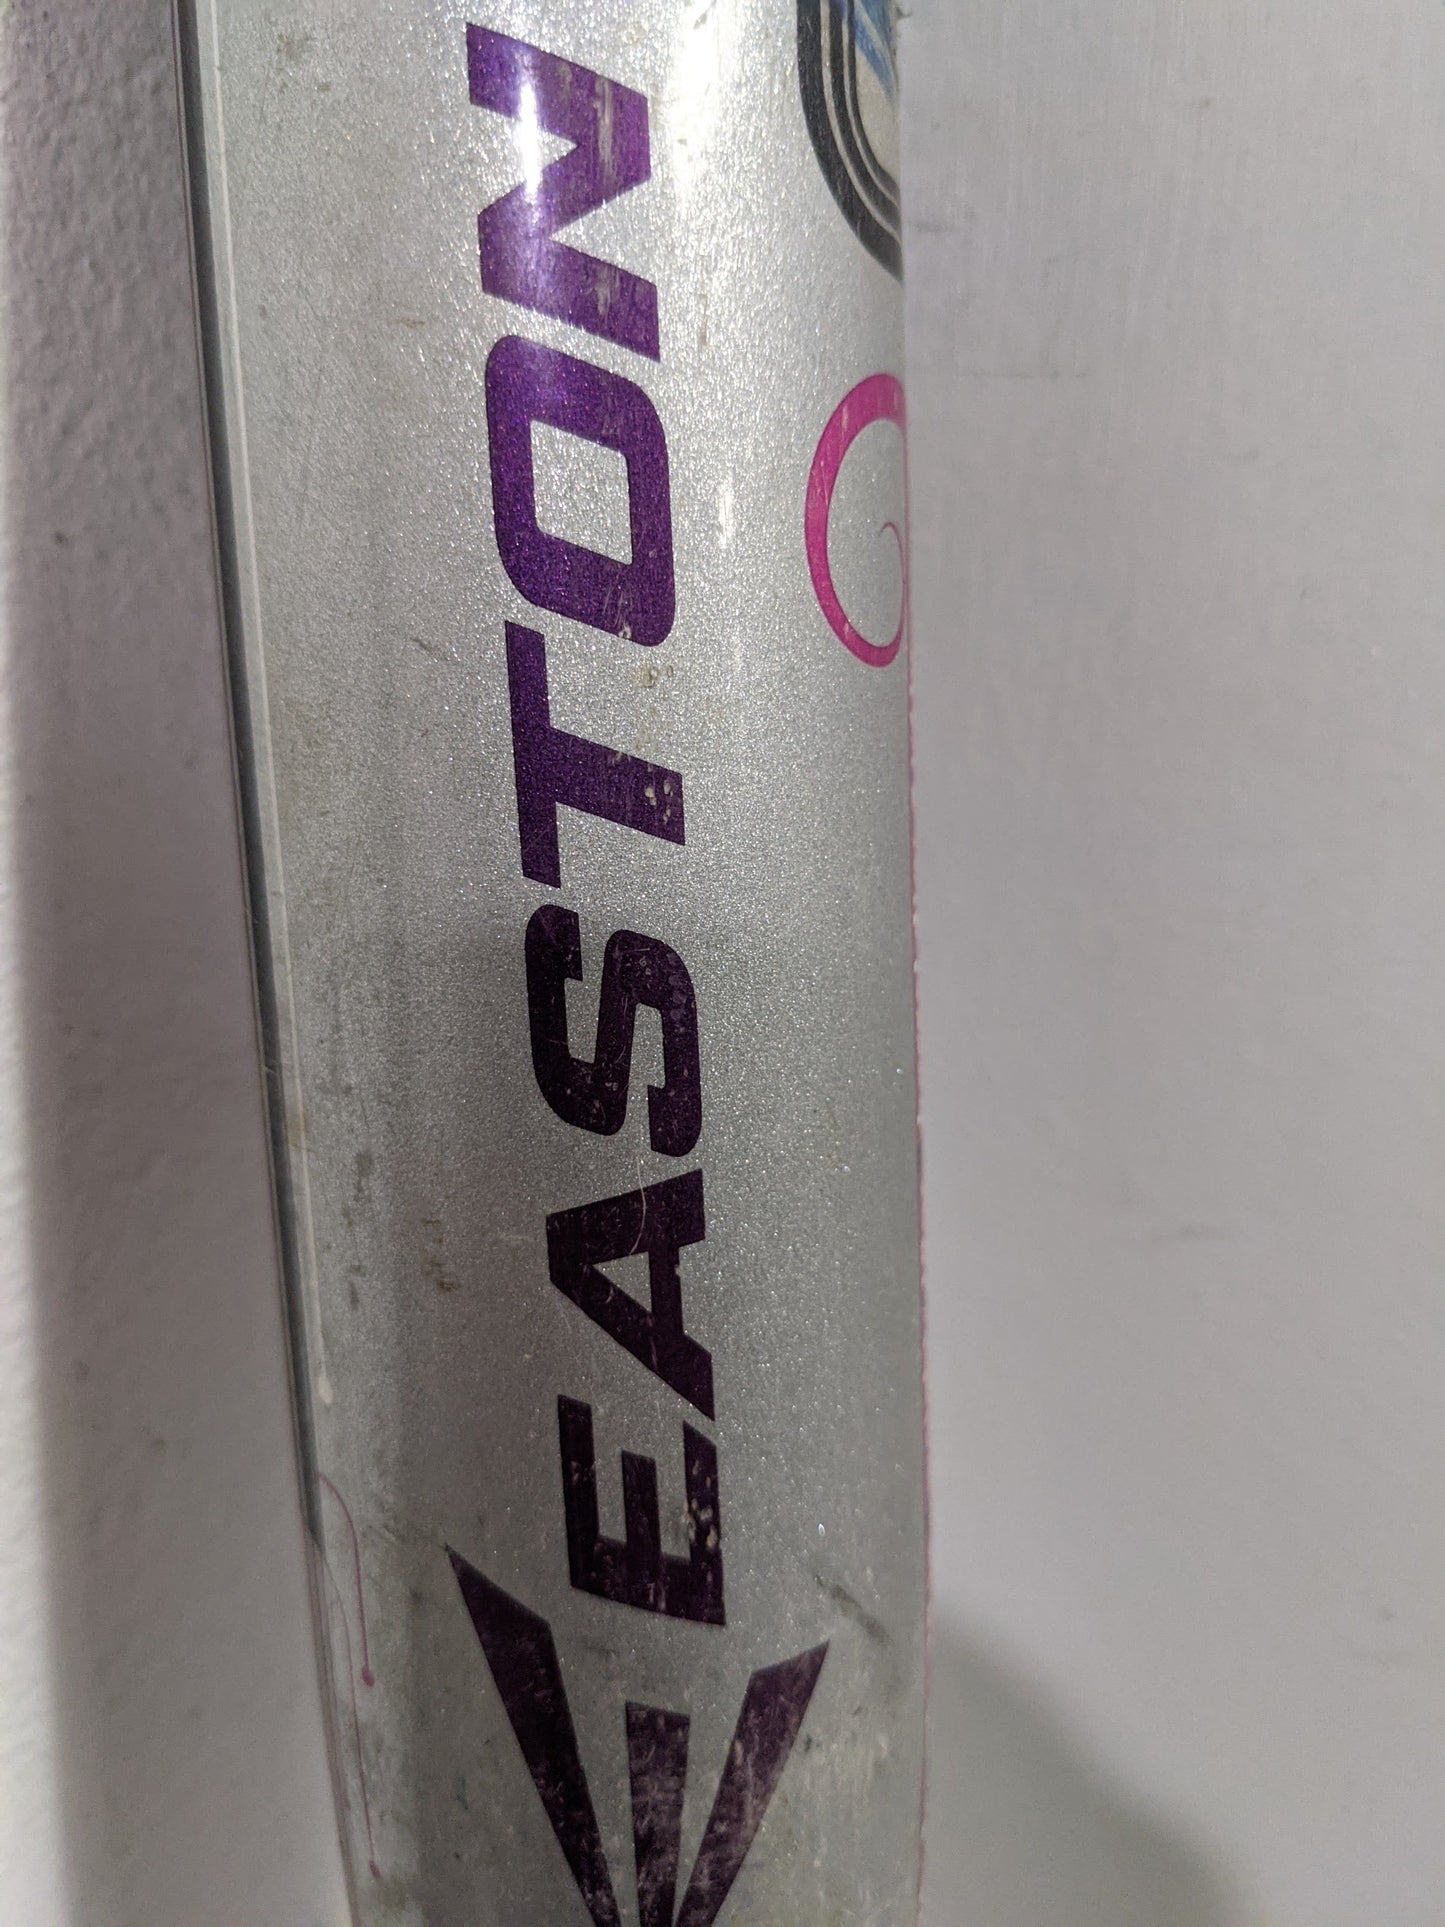 Easton Fast Pitch Baseball Bat Size 29 In 19 Oz Purple/Silver Used ISA ASA USSSA